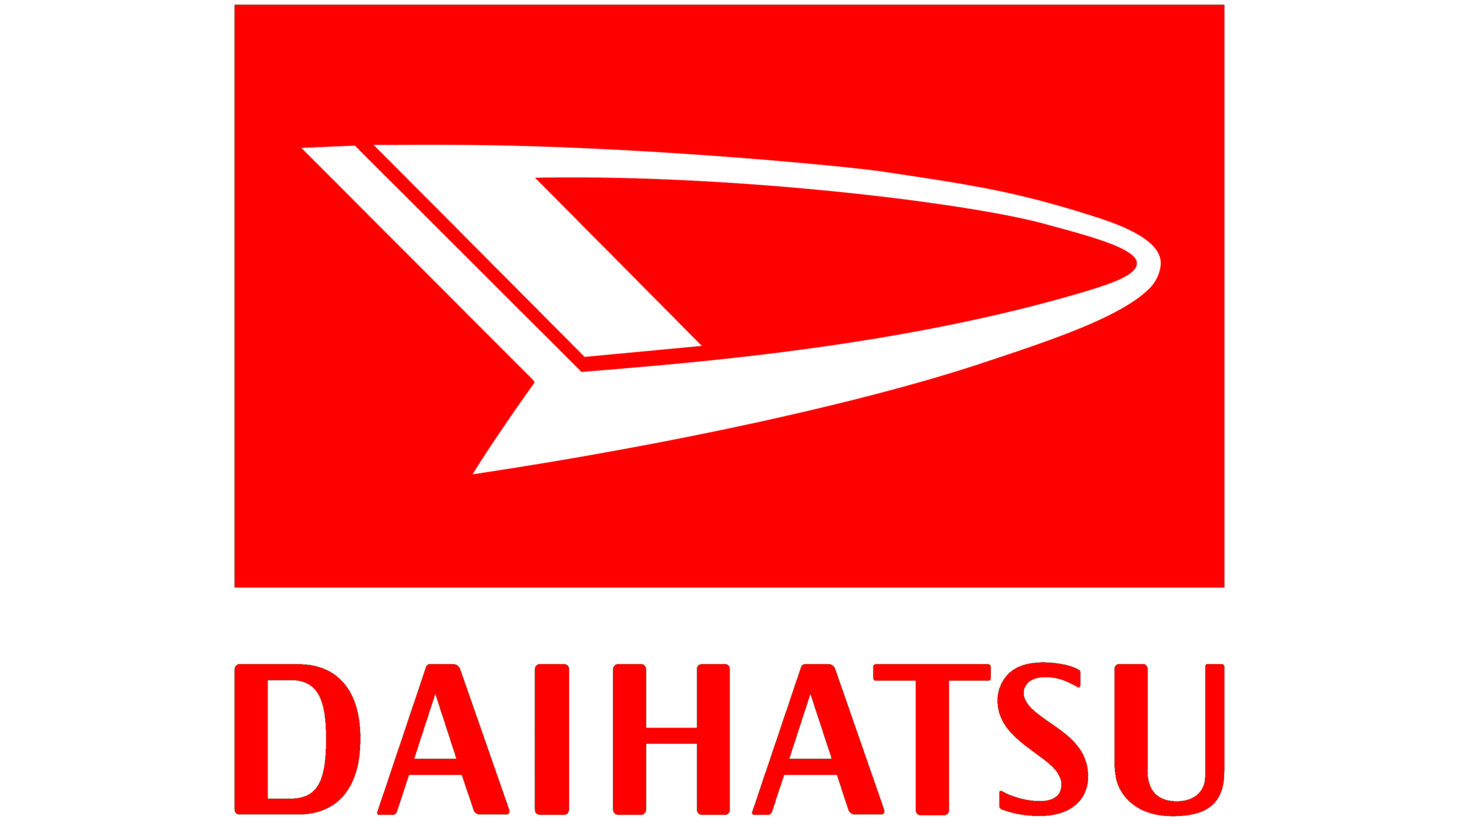 Daihatsu sign 1998 present